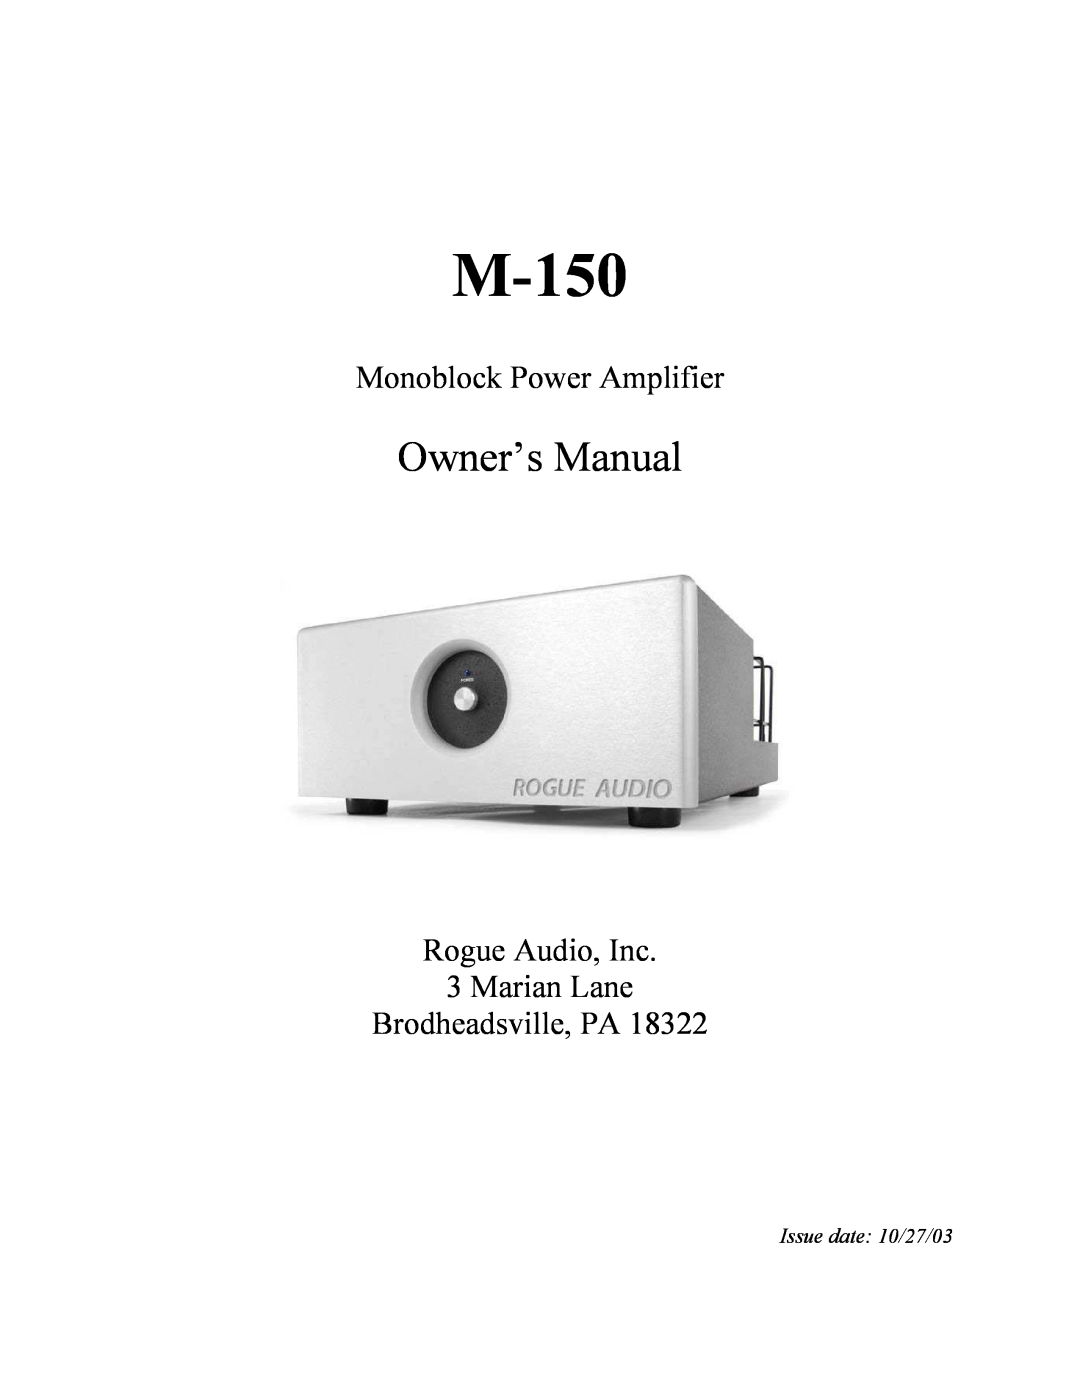 Rogue Audio M-150 owner manual Monoblock Power Amplifier, Rogue Audio, Inc 3 Marian Lane Brodheadsville, PA 